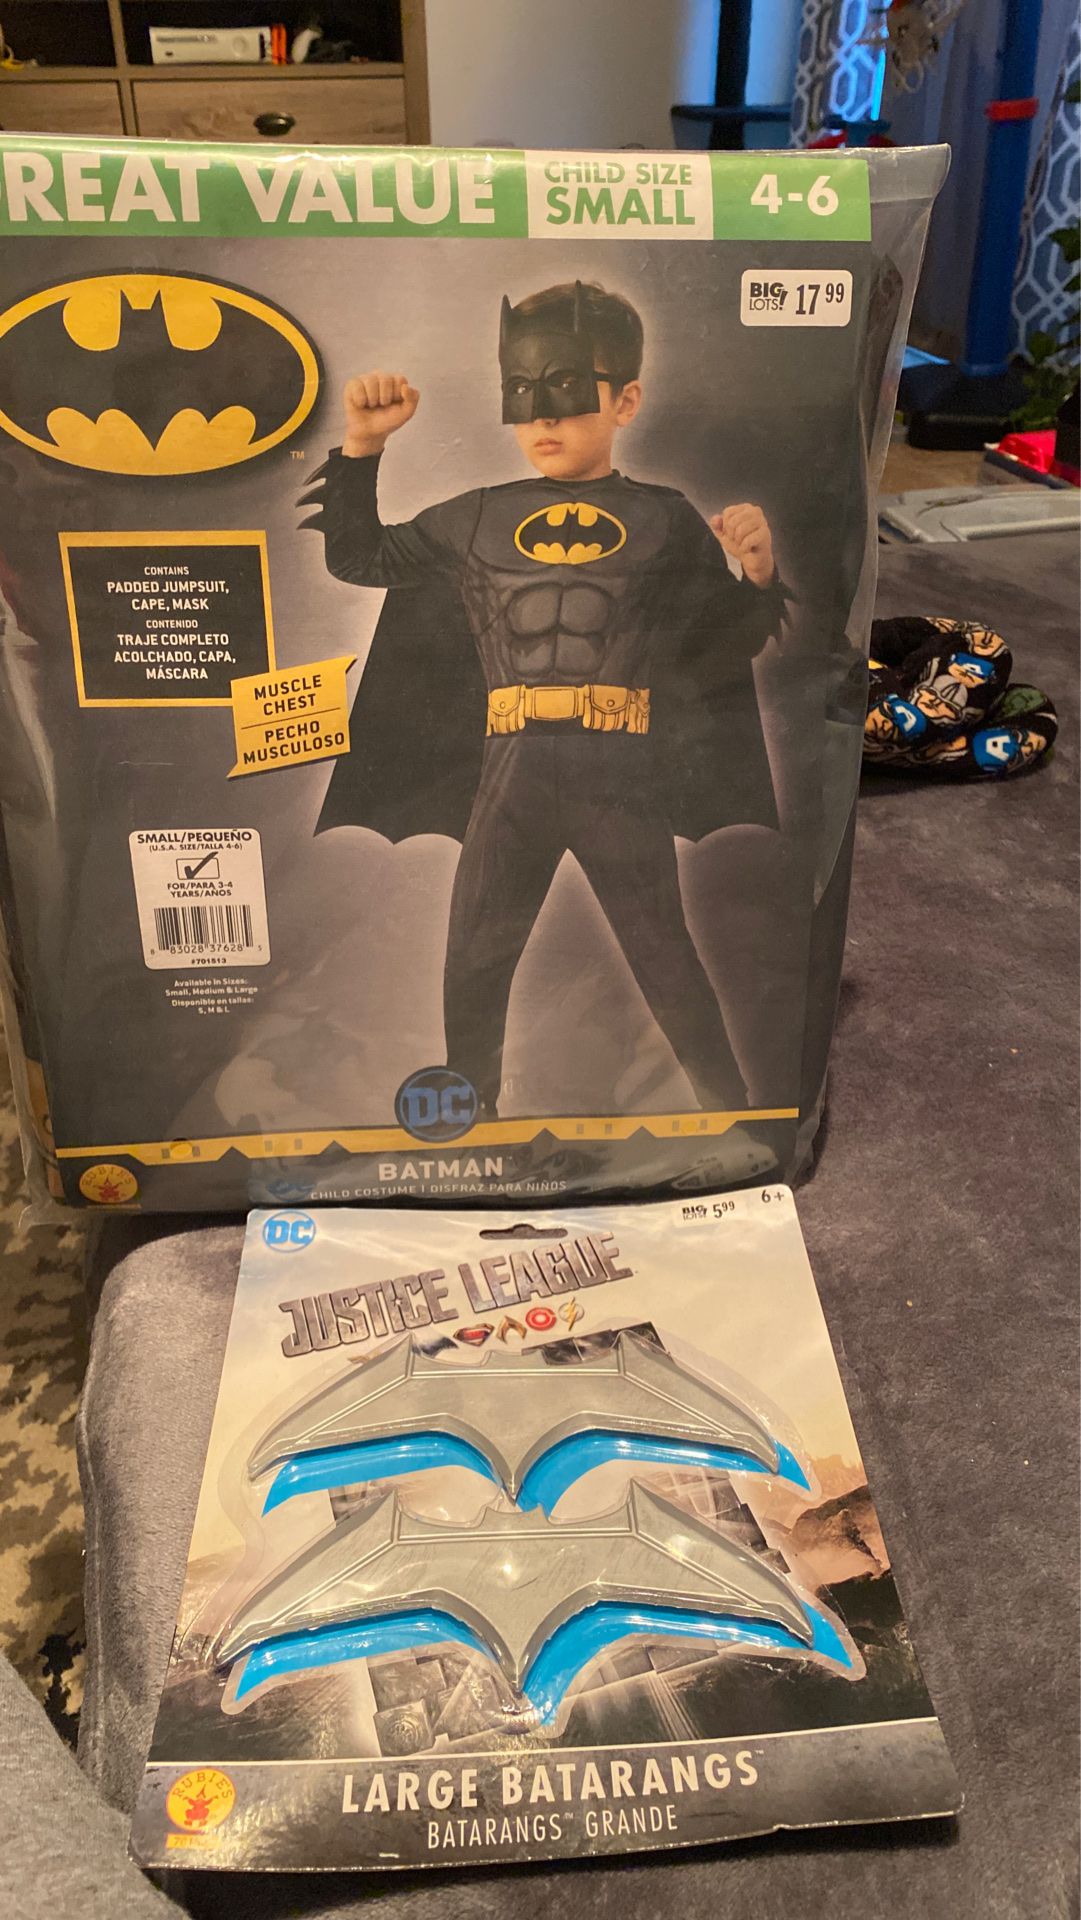 Batman costume and large batarangs